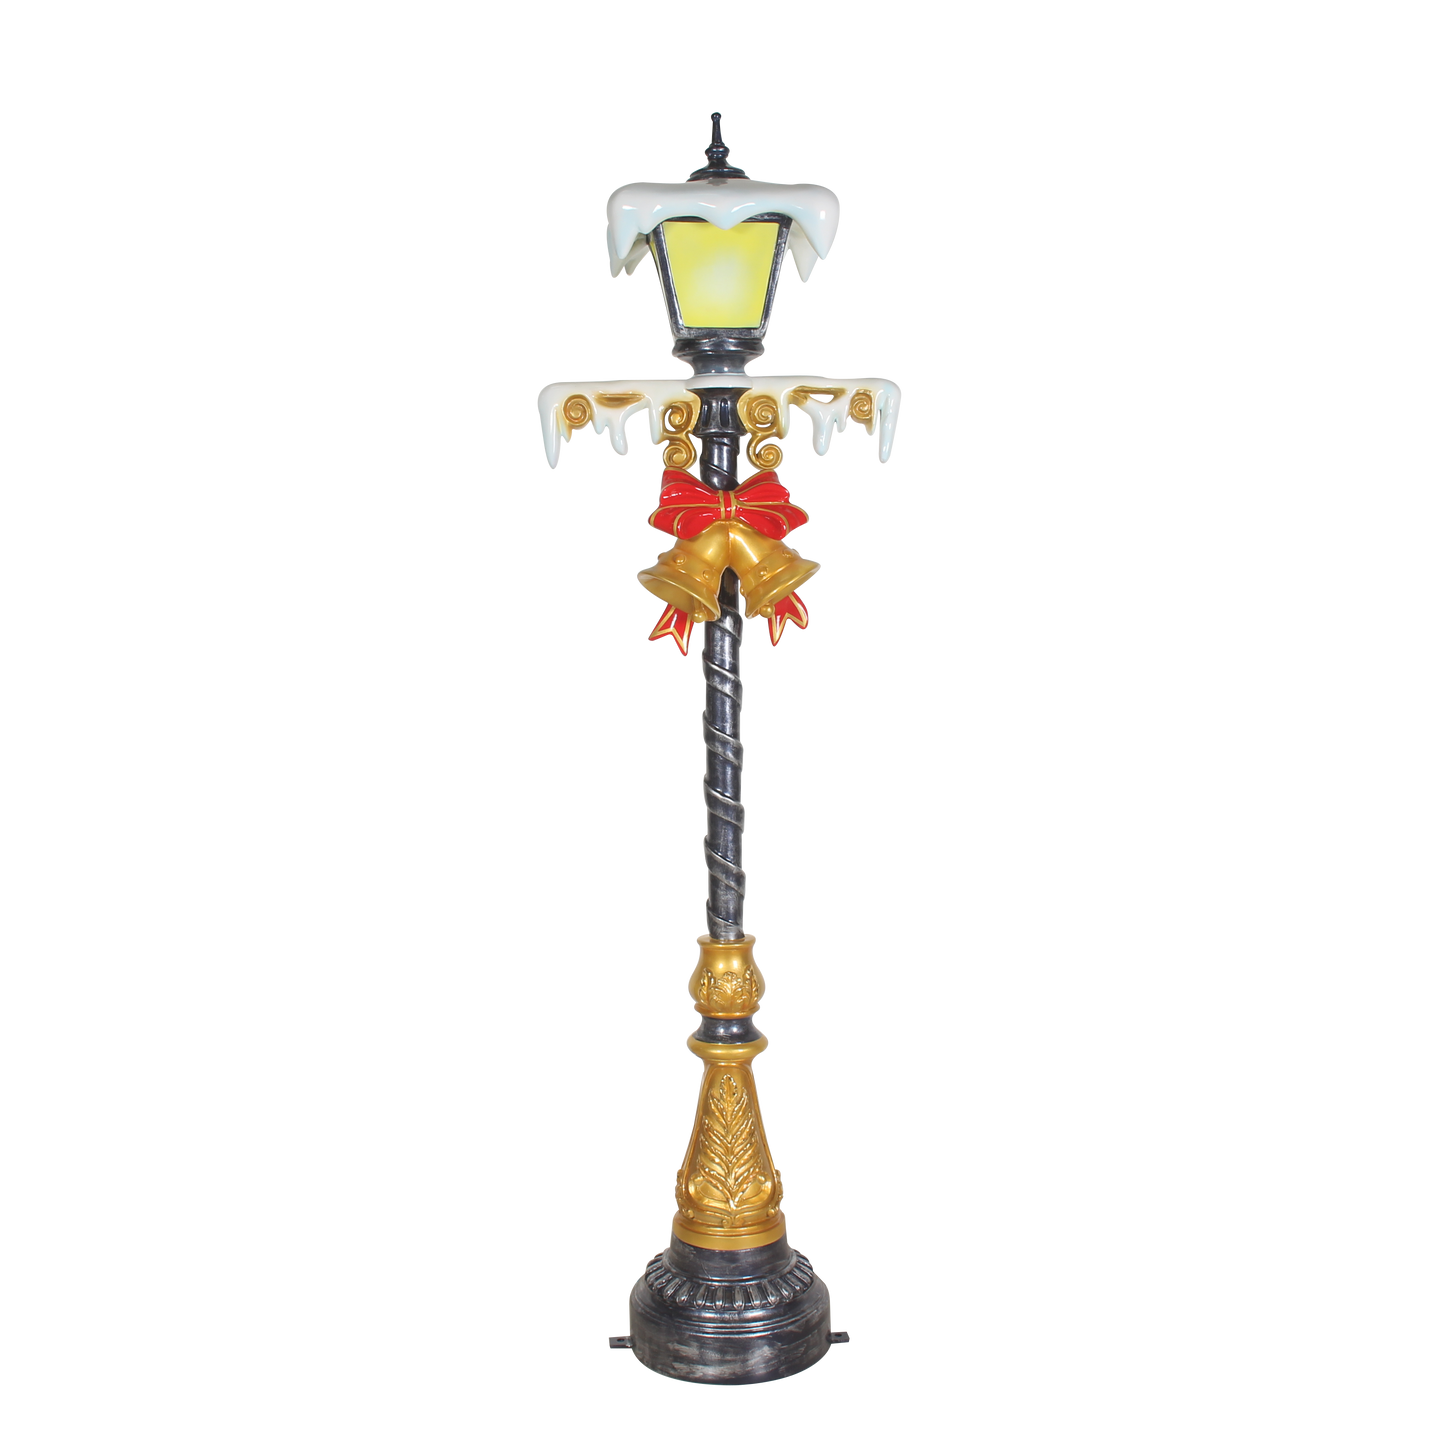 7ft Fiberglass Resin Lamp Post w/Lights